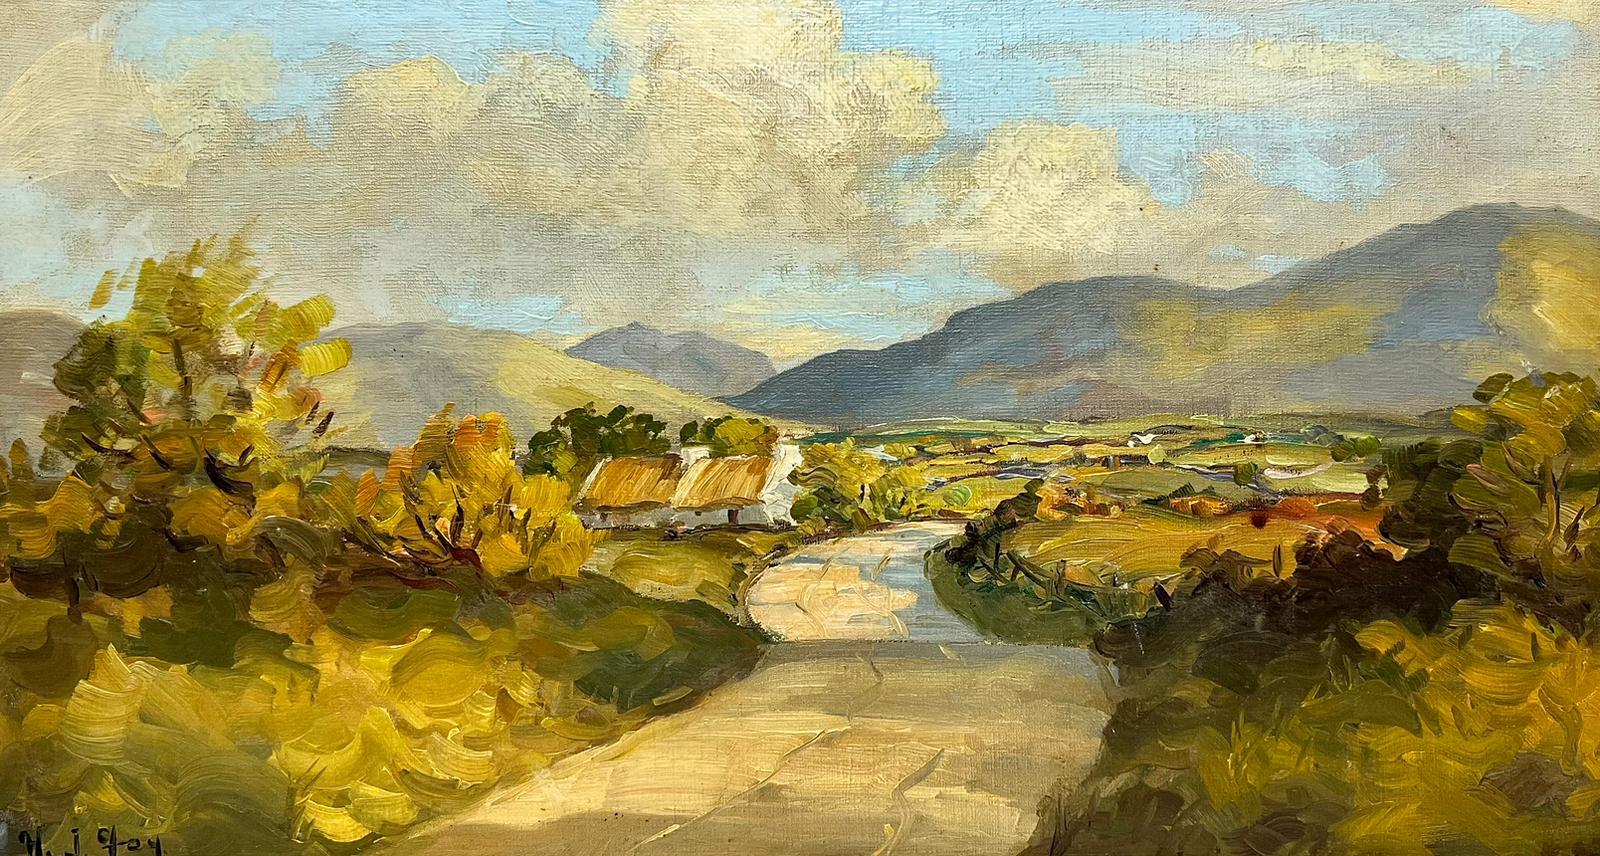 Irish artist Landscape Painting - The Mourne Mountains County Down Ireland Signed Original Irish Oil Painting